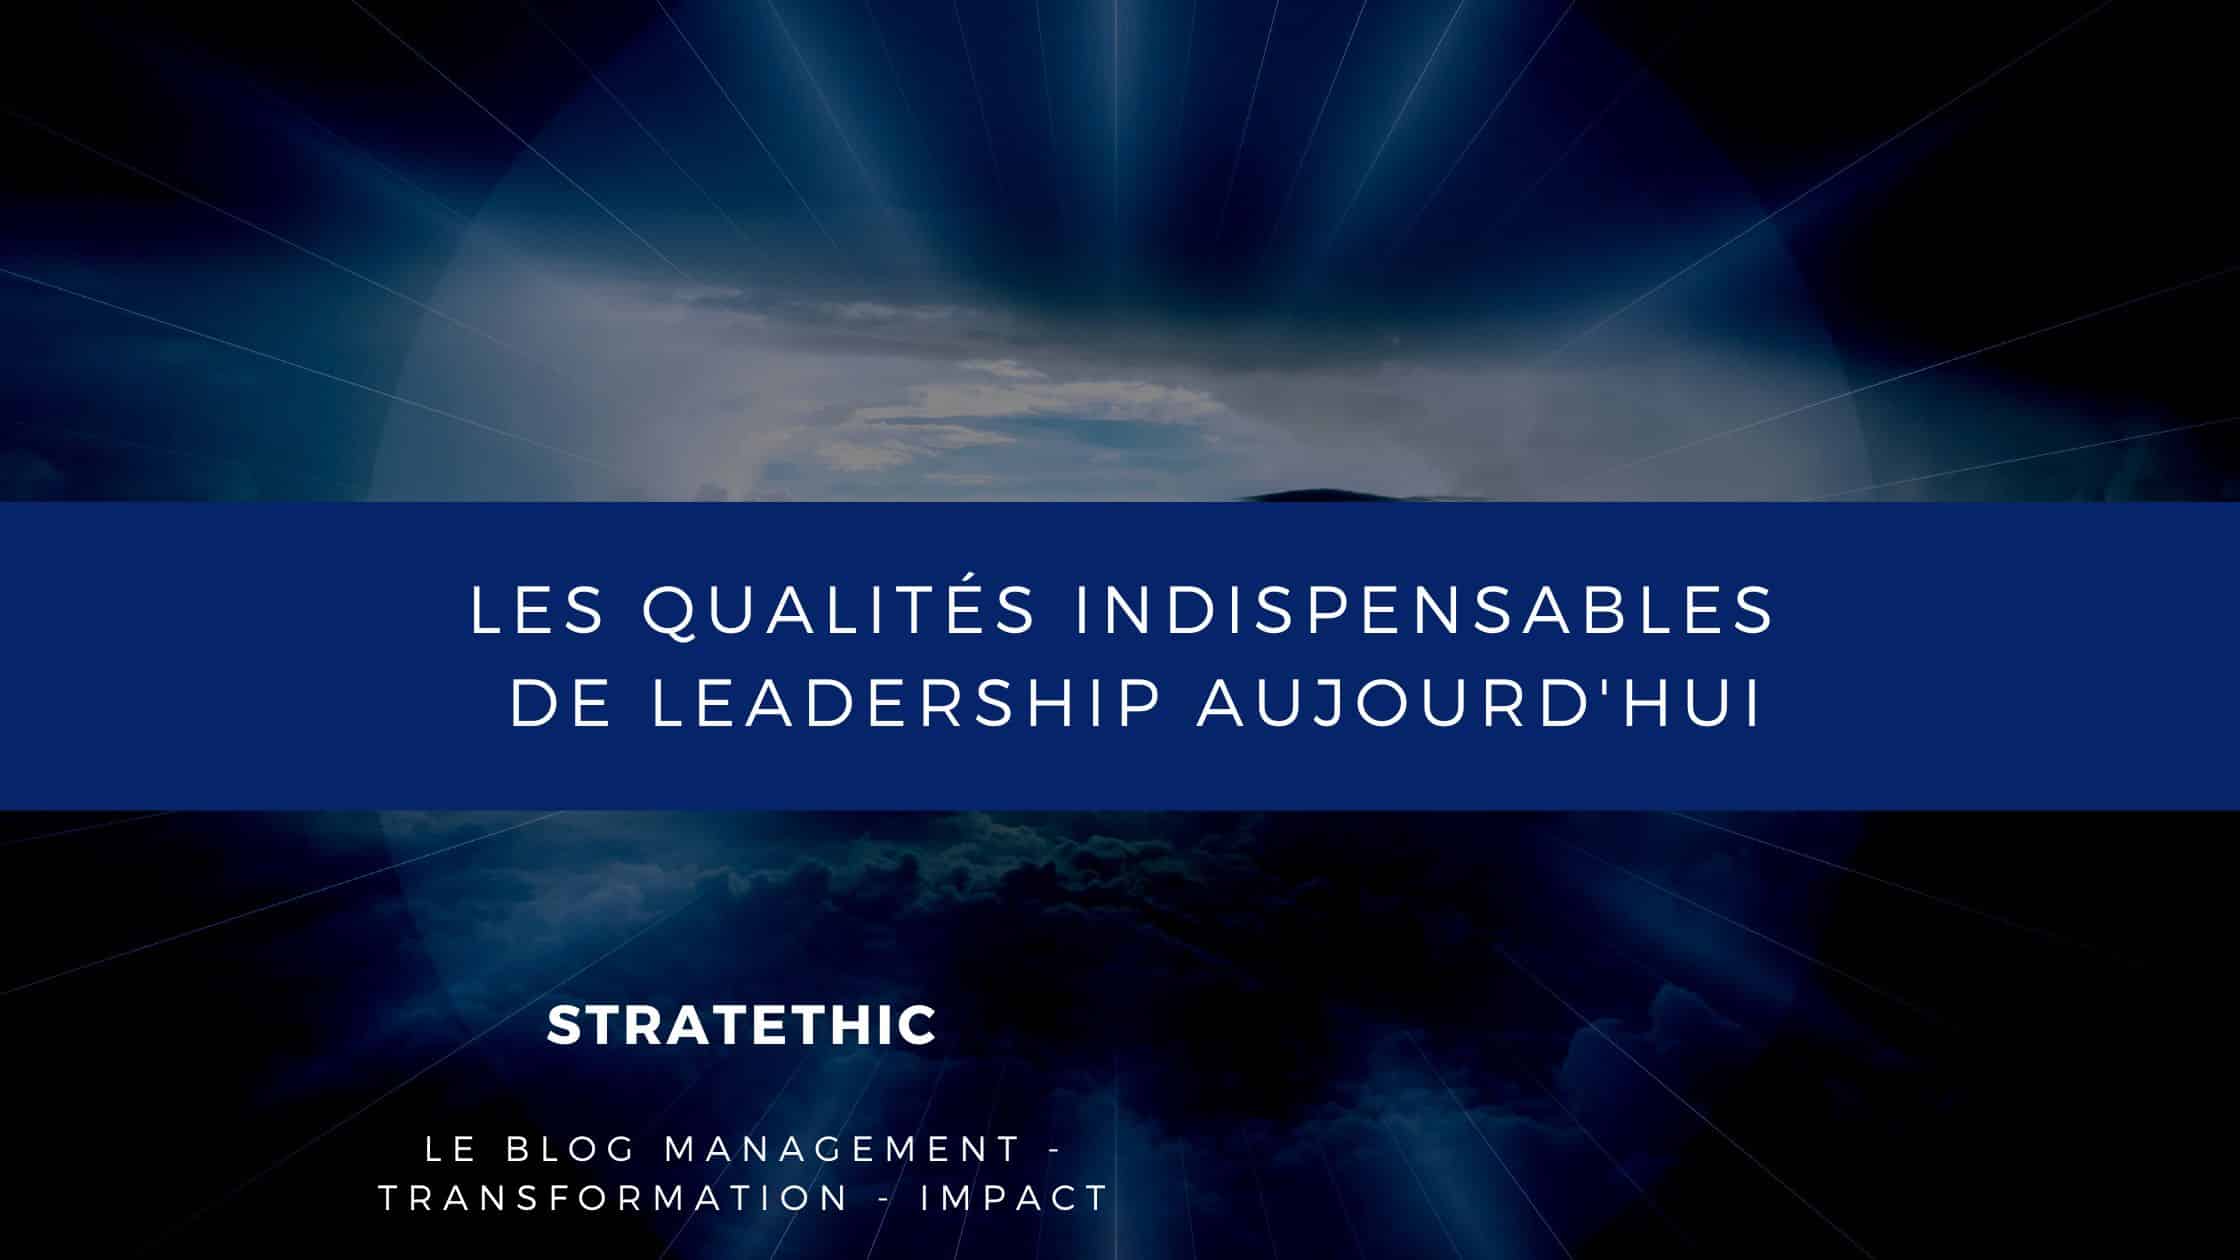 Les qualités fondamentales d'un leadership efficace